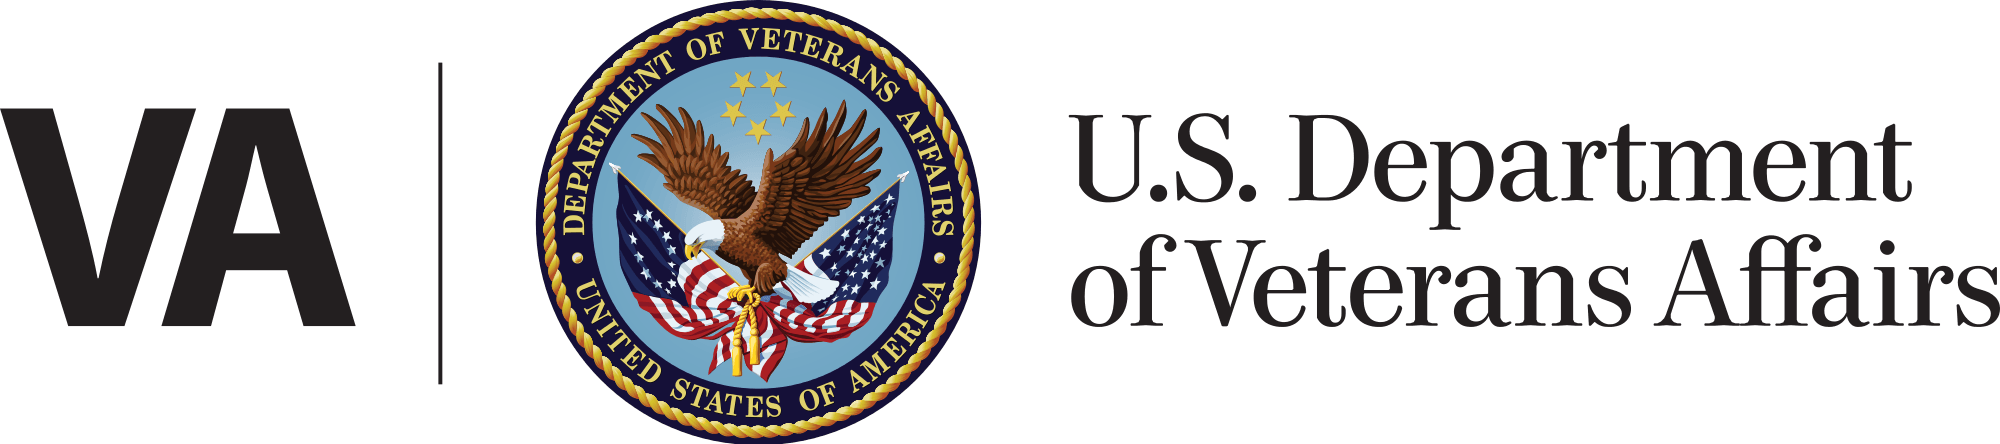 VA Logo - VA.gov